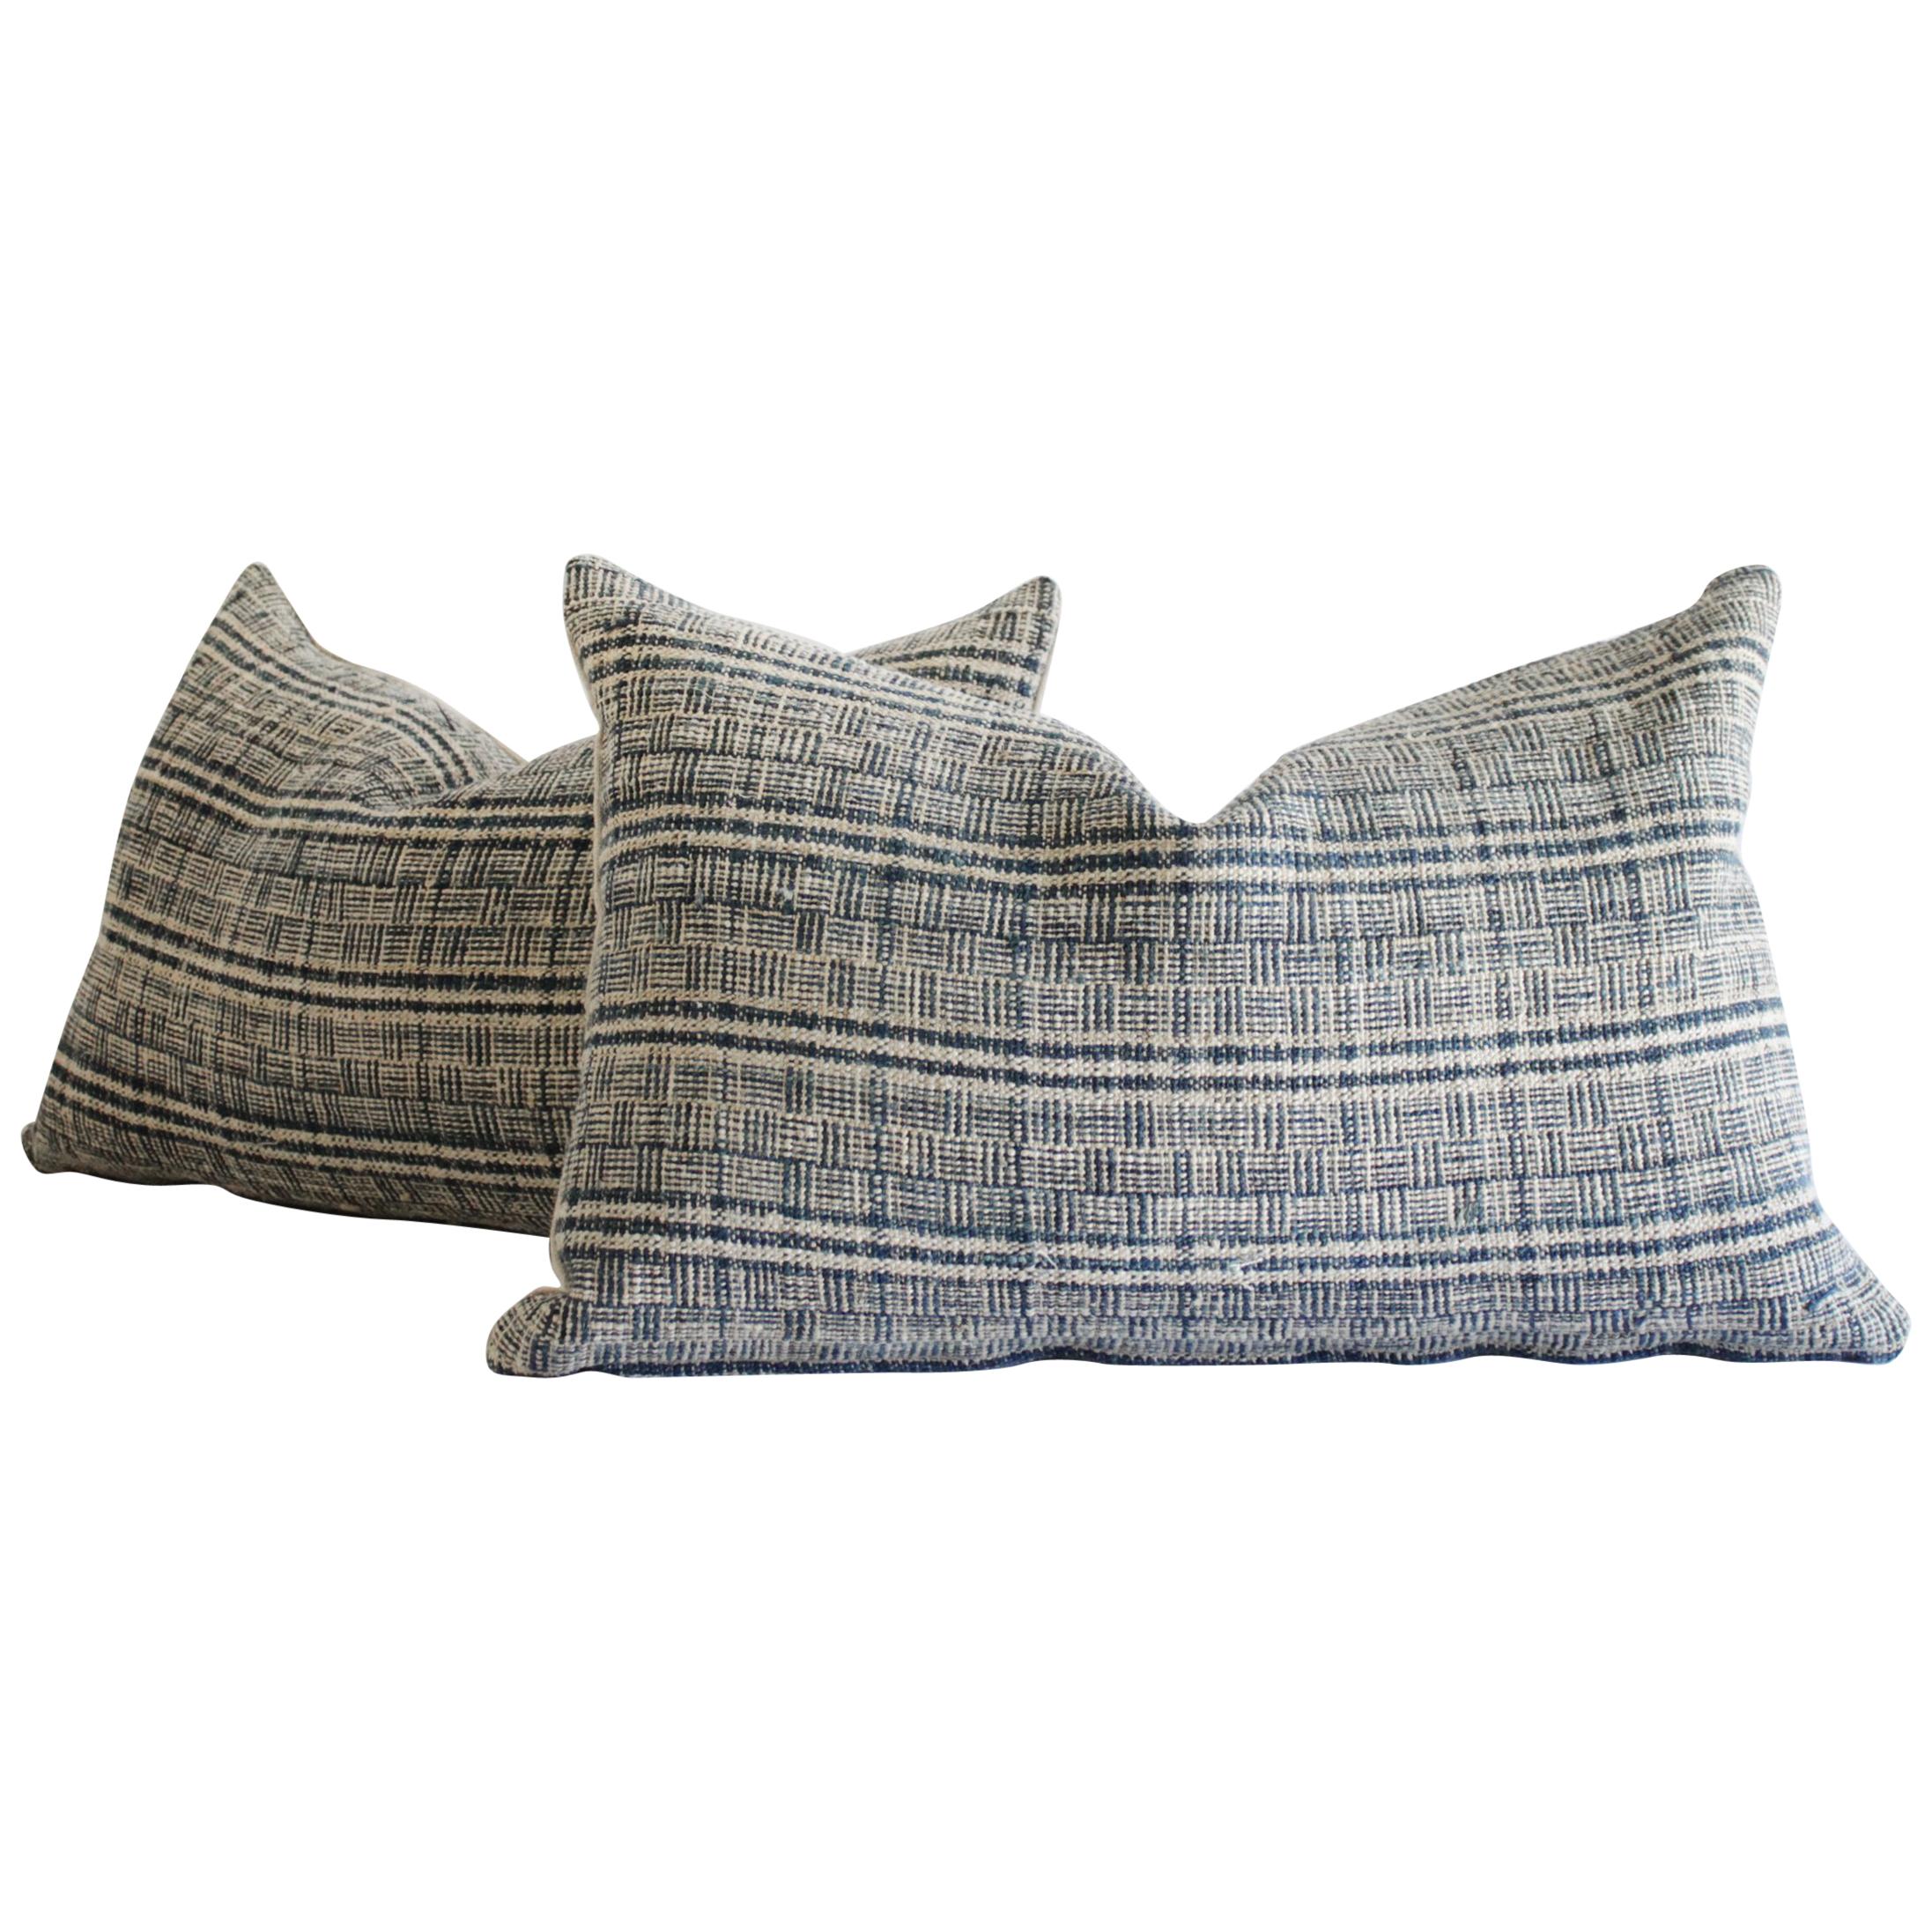 Homespun Linen Lumbar Pillows Made from Vintage Indigo Stripe and Linen